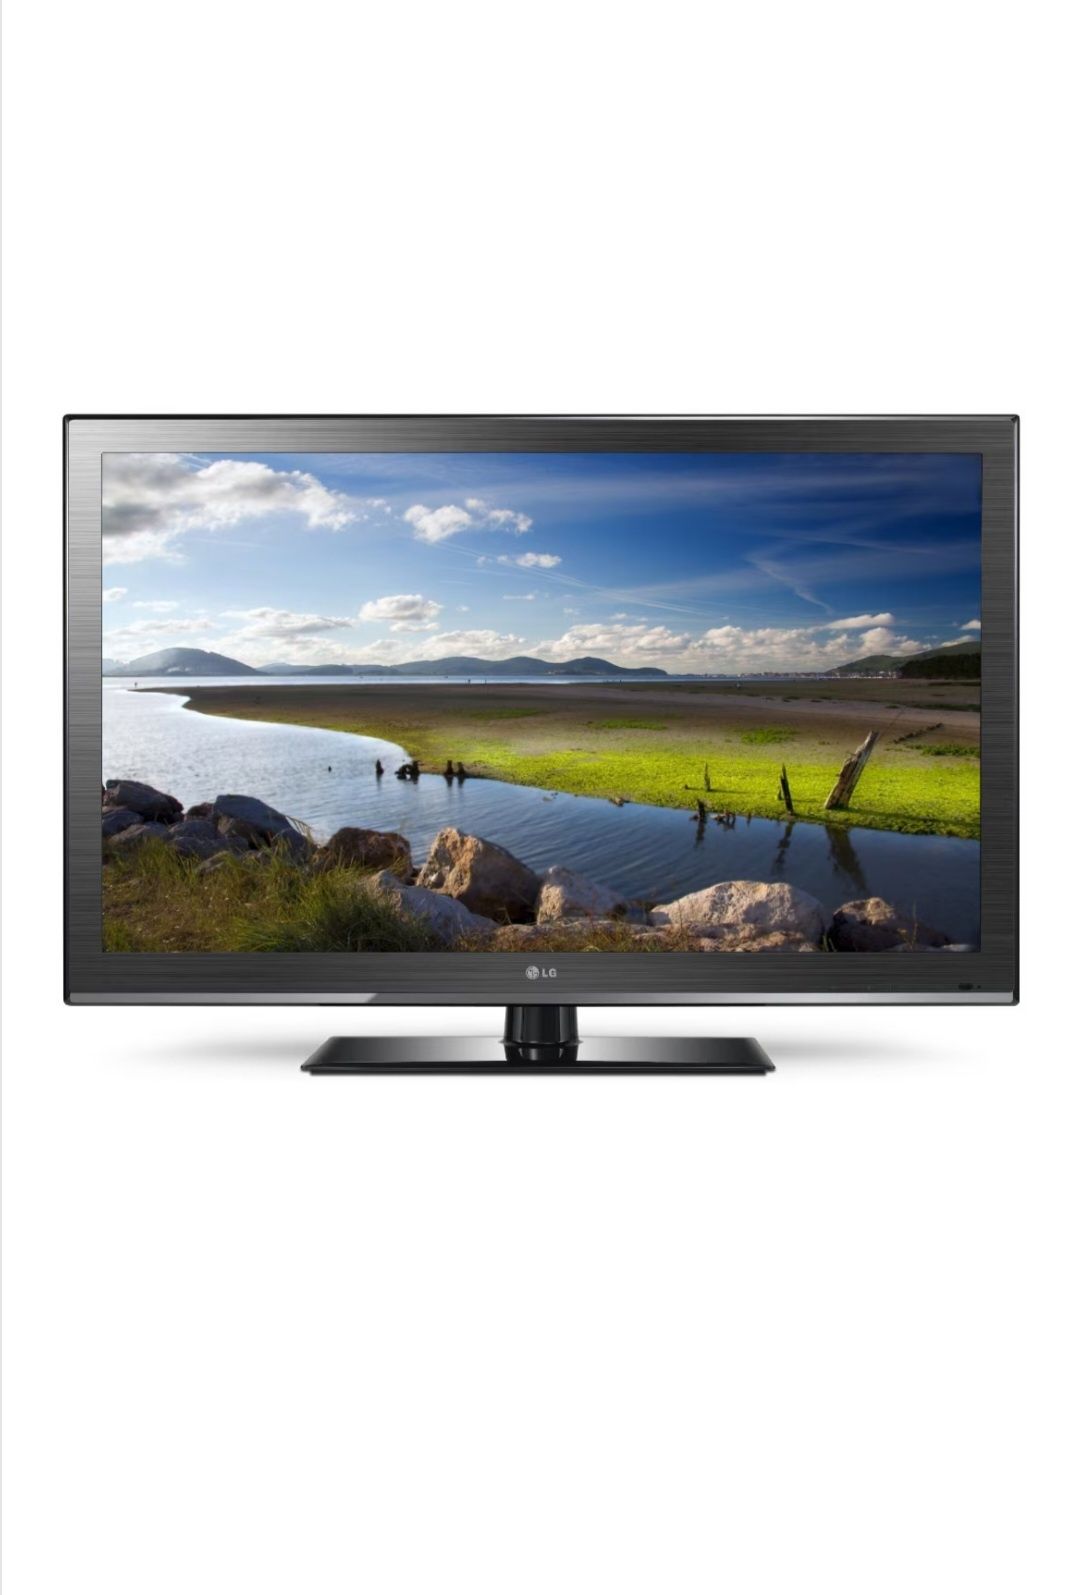 Vand Televizor LG HD - 300 lei